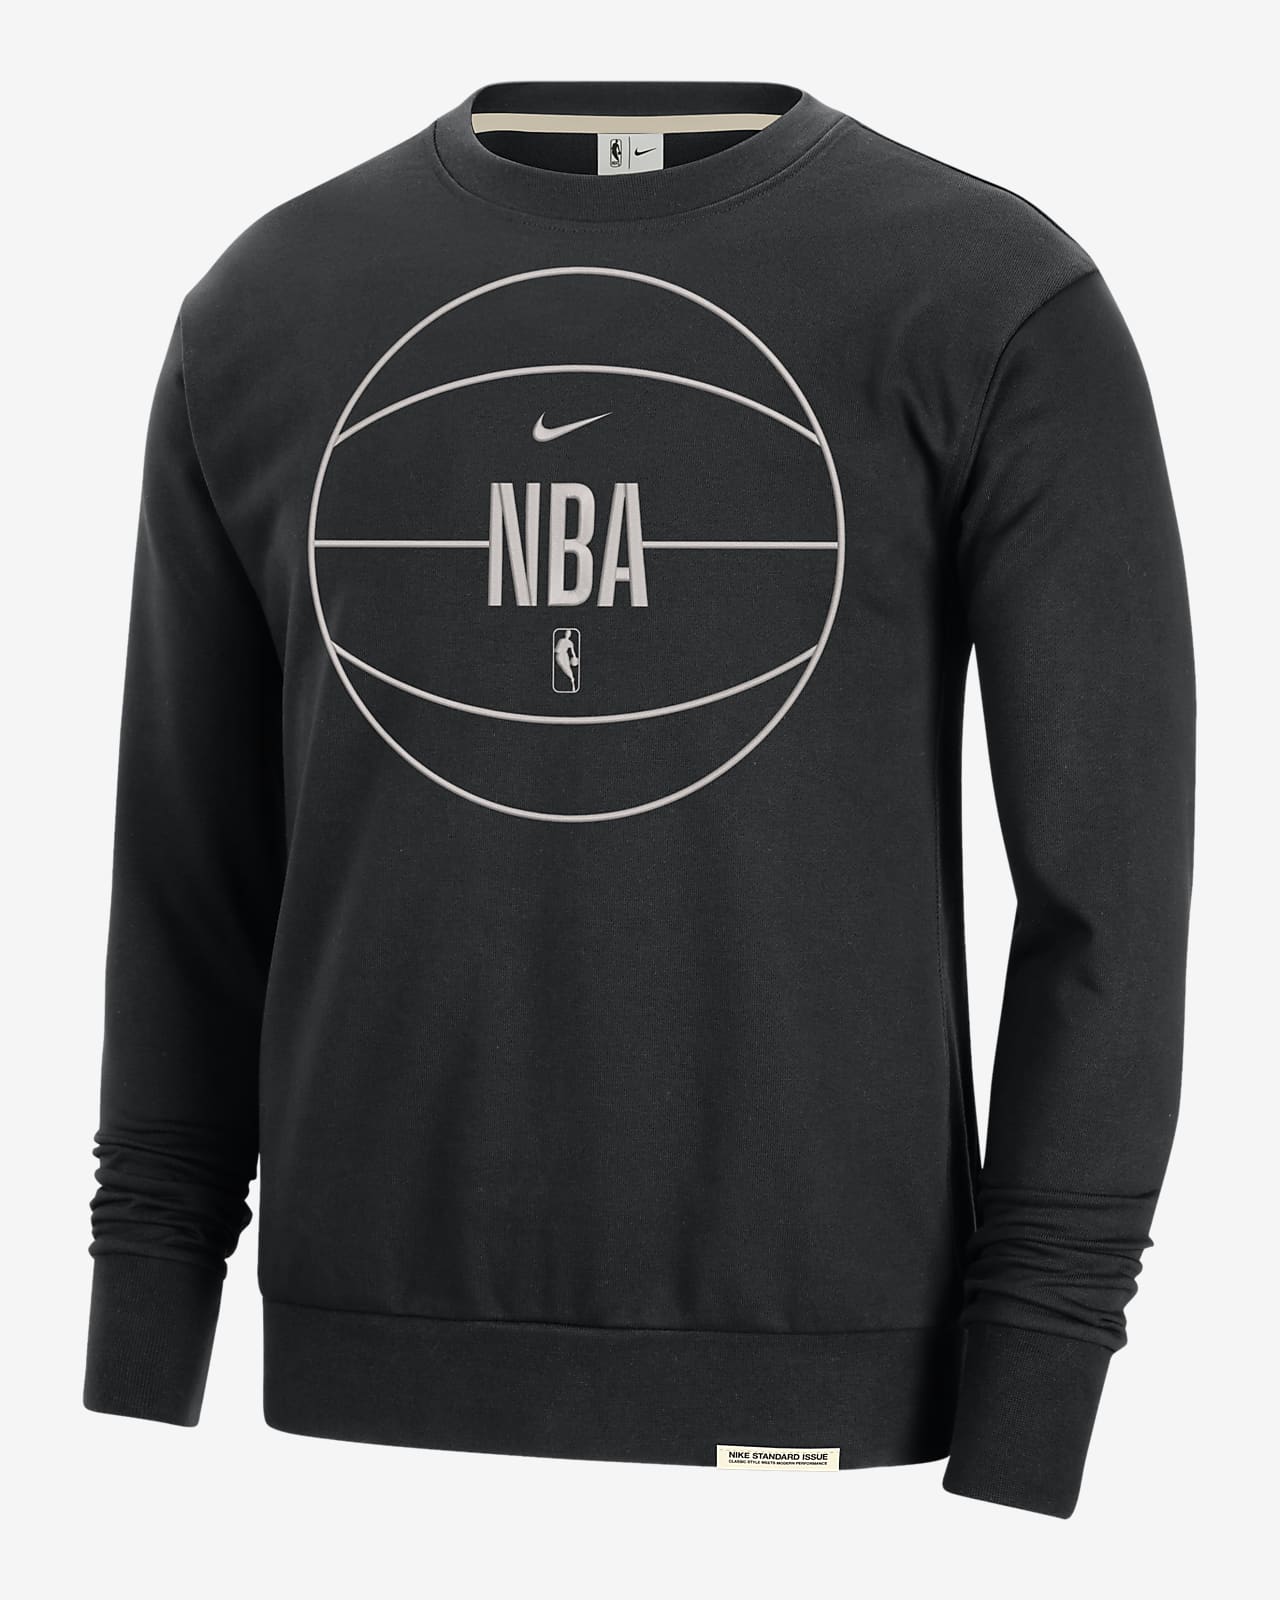 Team 31 Standard Issue Men's Nike Dri-FIT NBA Crew-Neck Sweatshirt